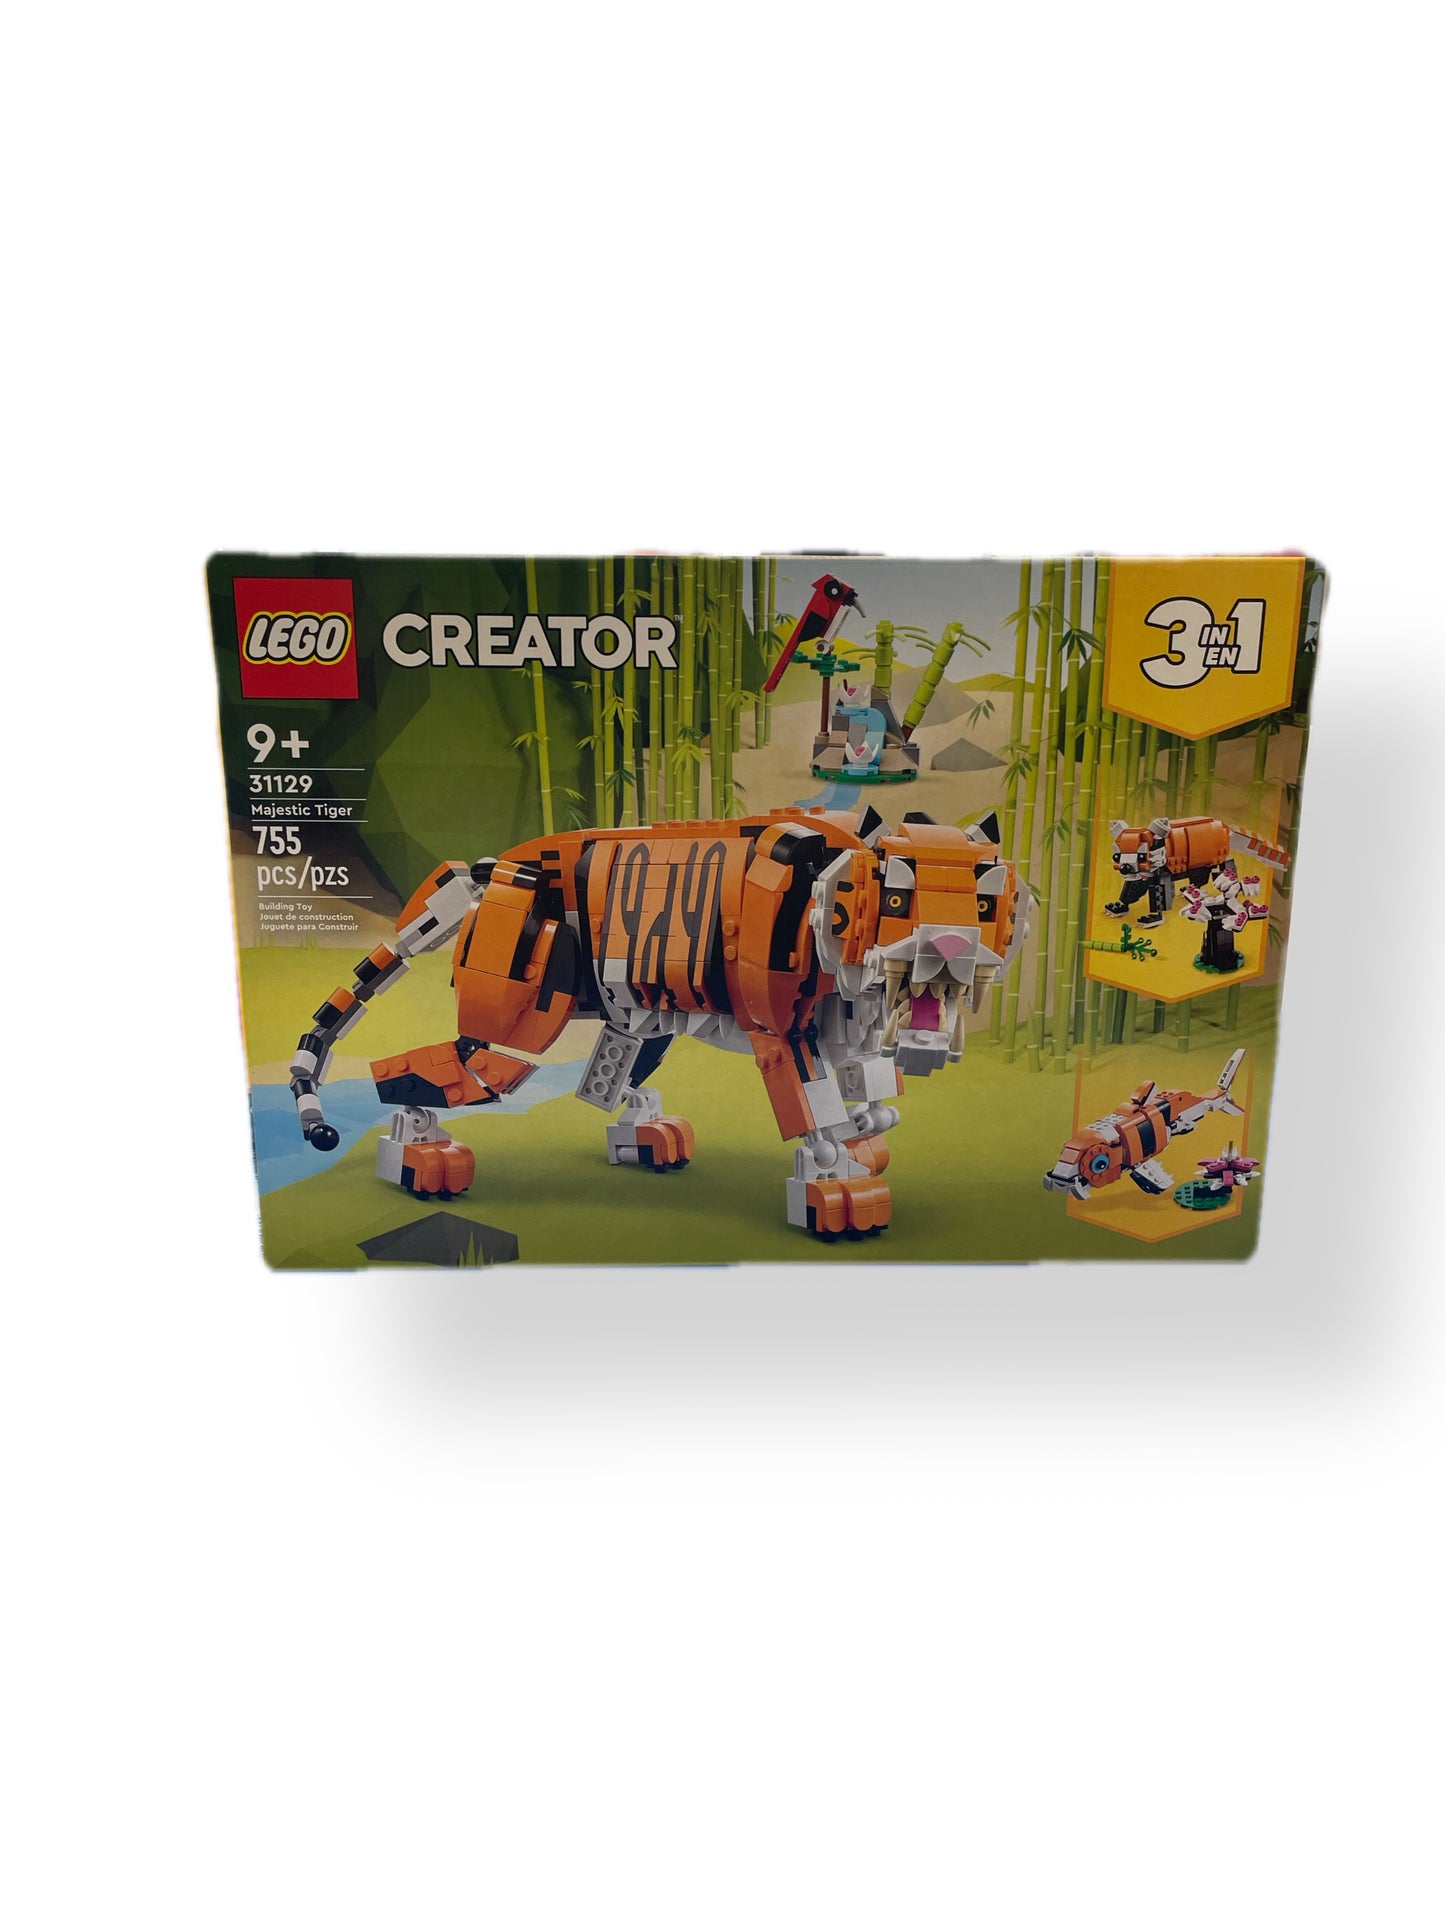 Lego Majestic Tiger 3 in 1 Creator